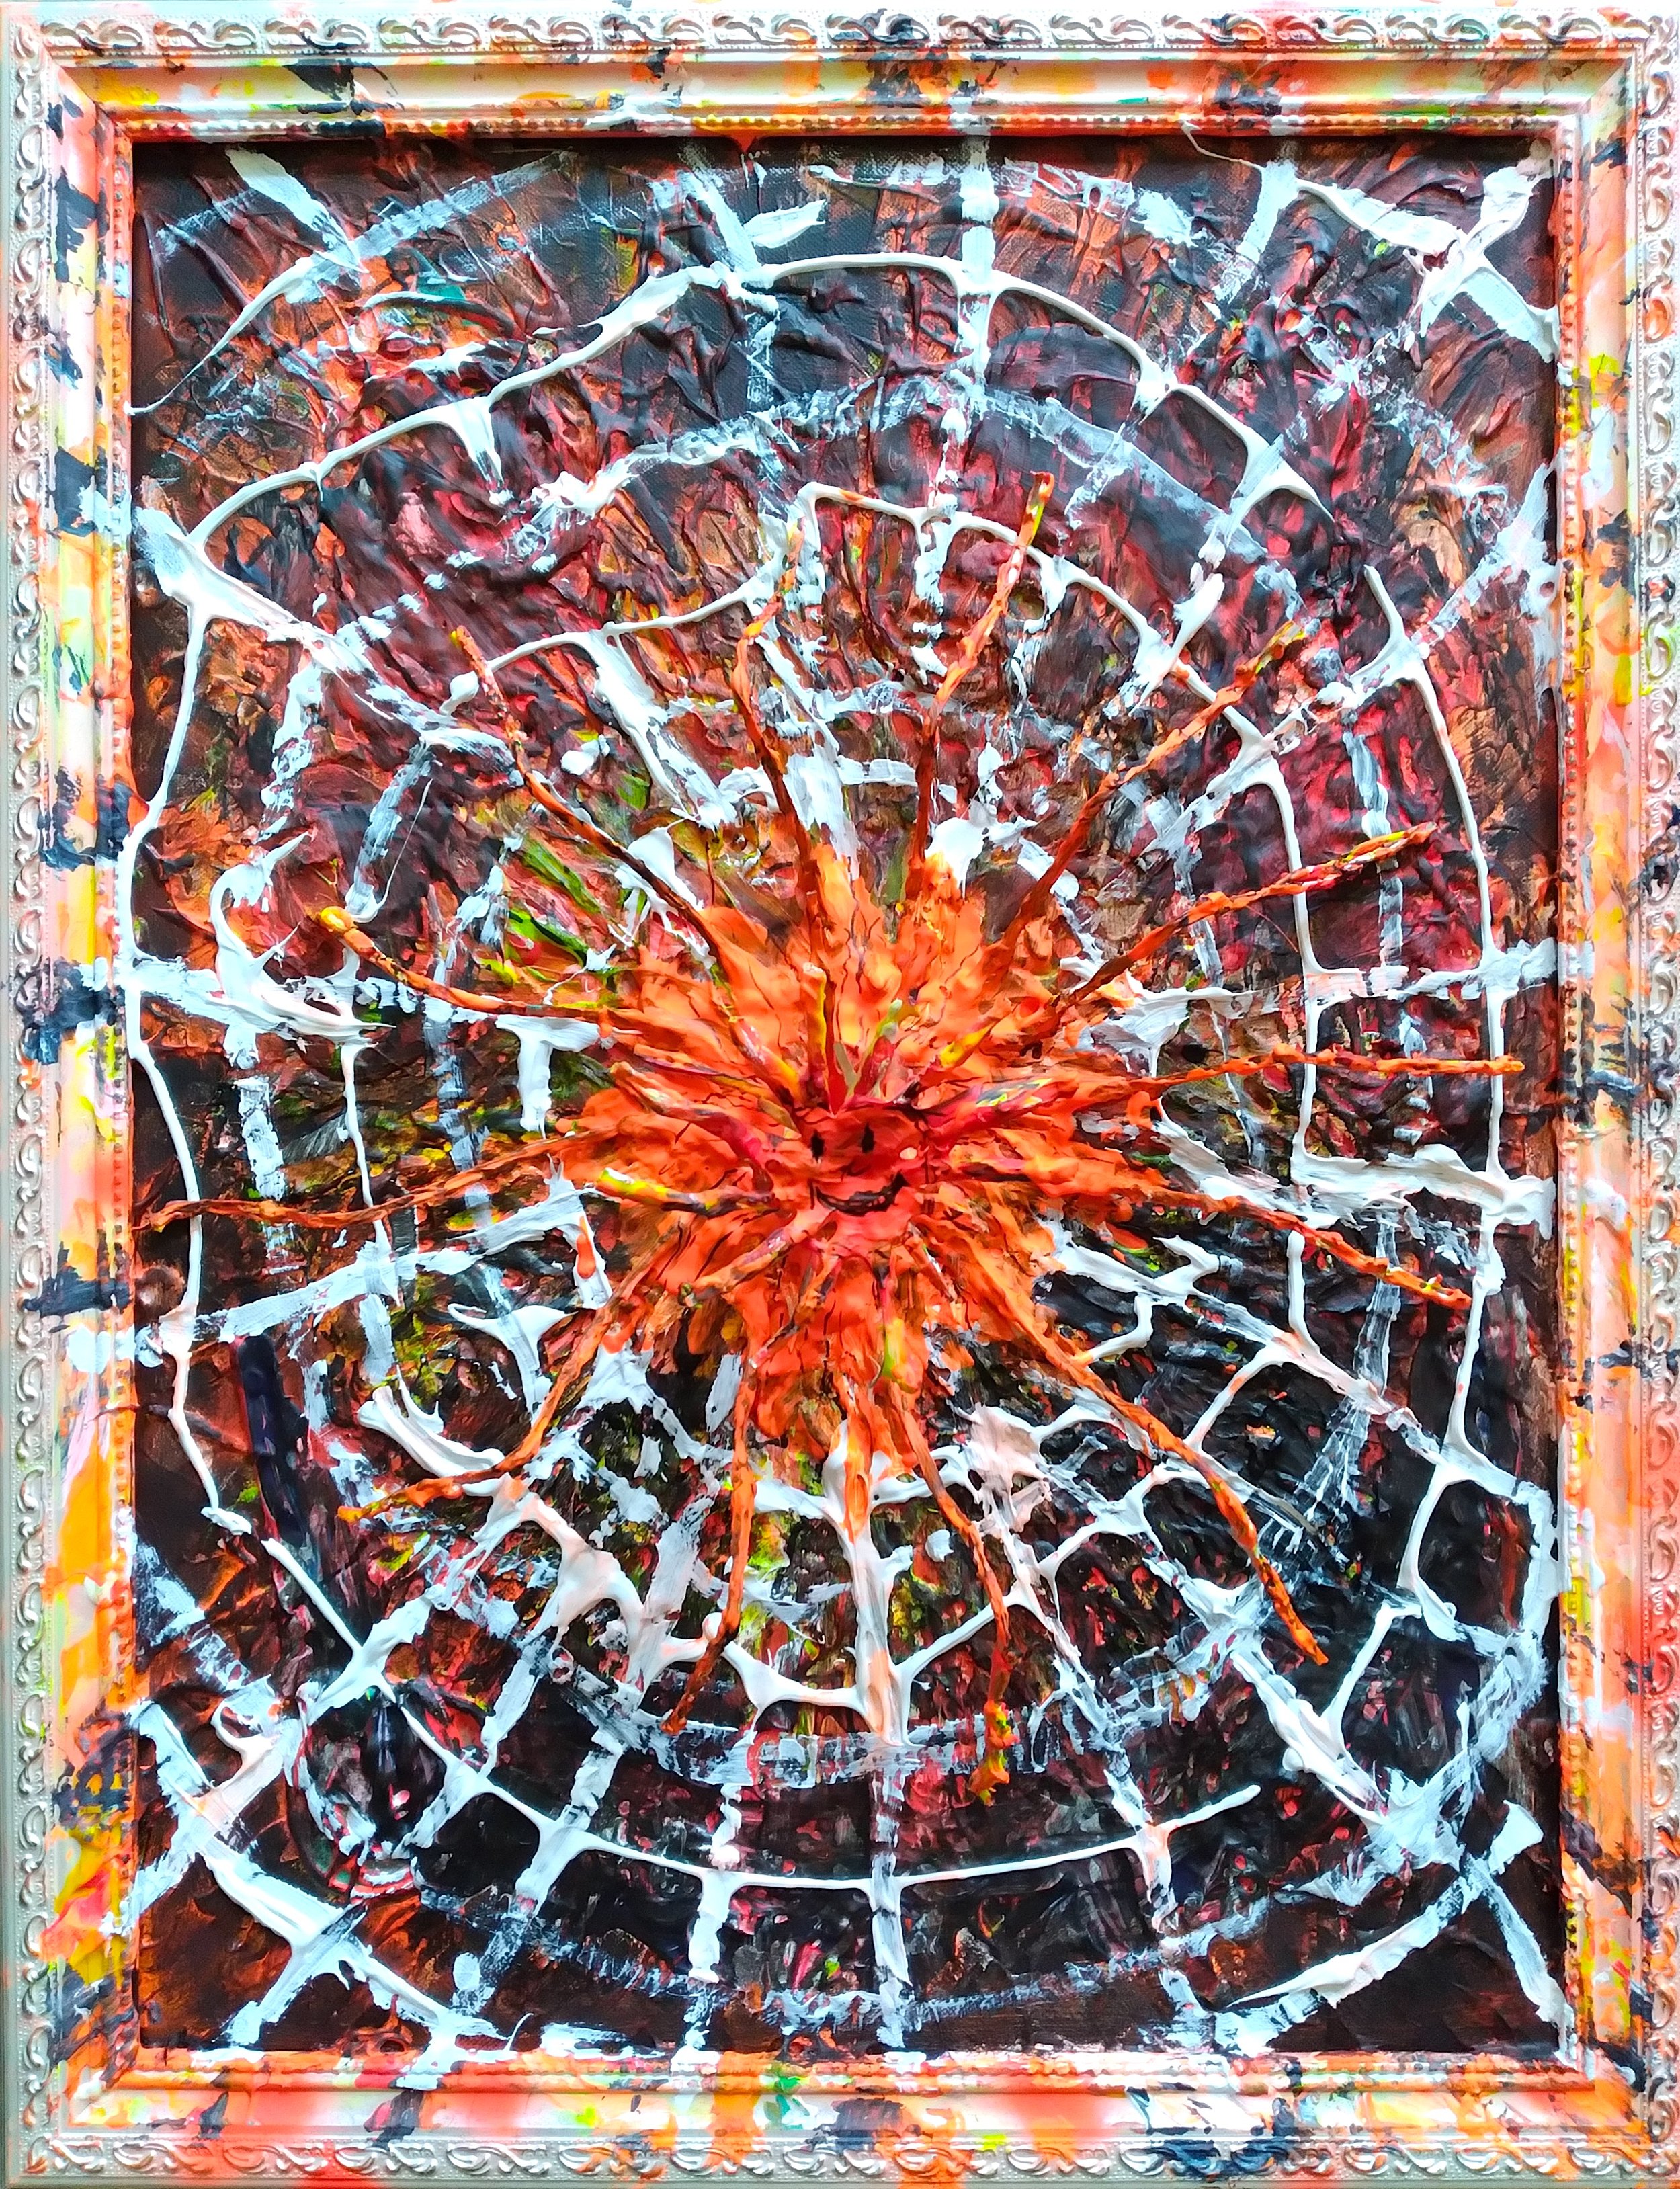 The Metamorphosis, 2014. Oil, acrylic, metal on canvas. 24” x 18”.